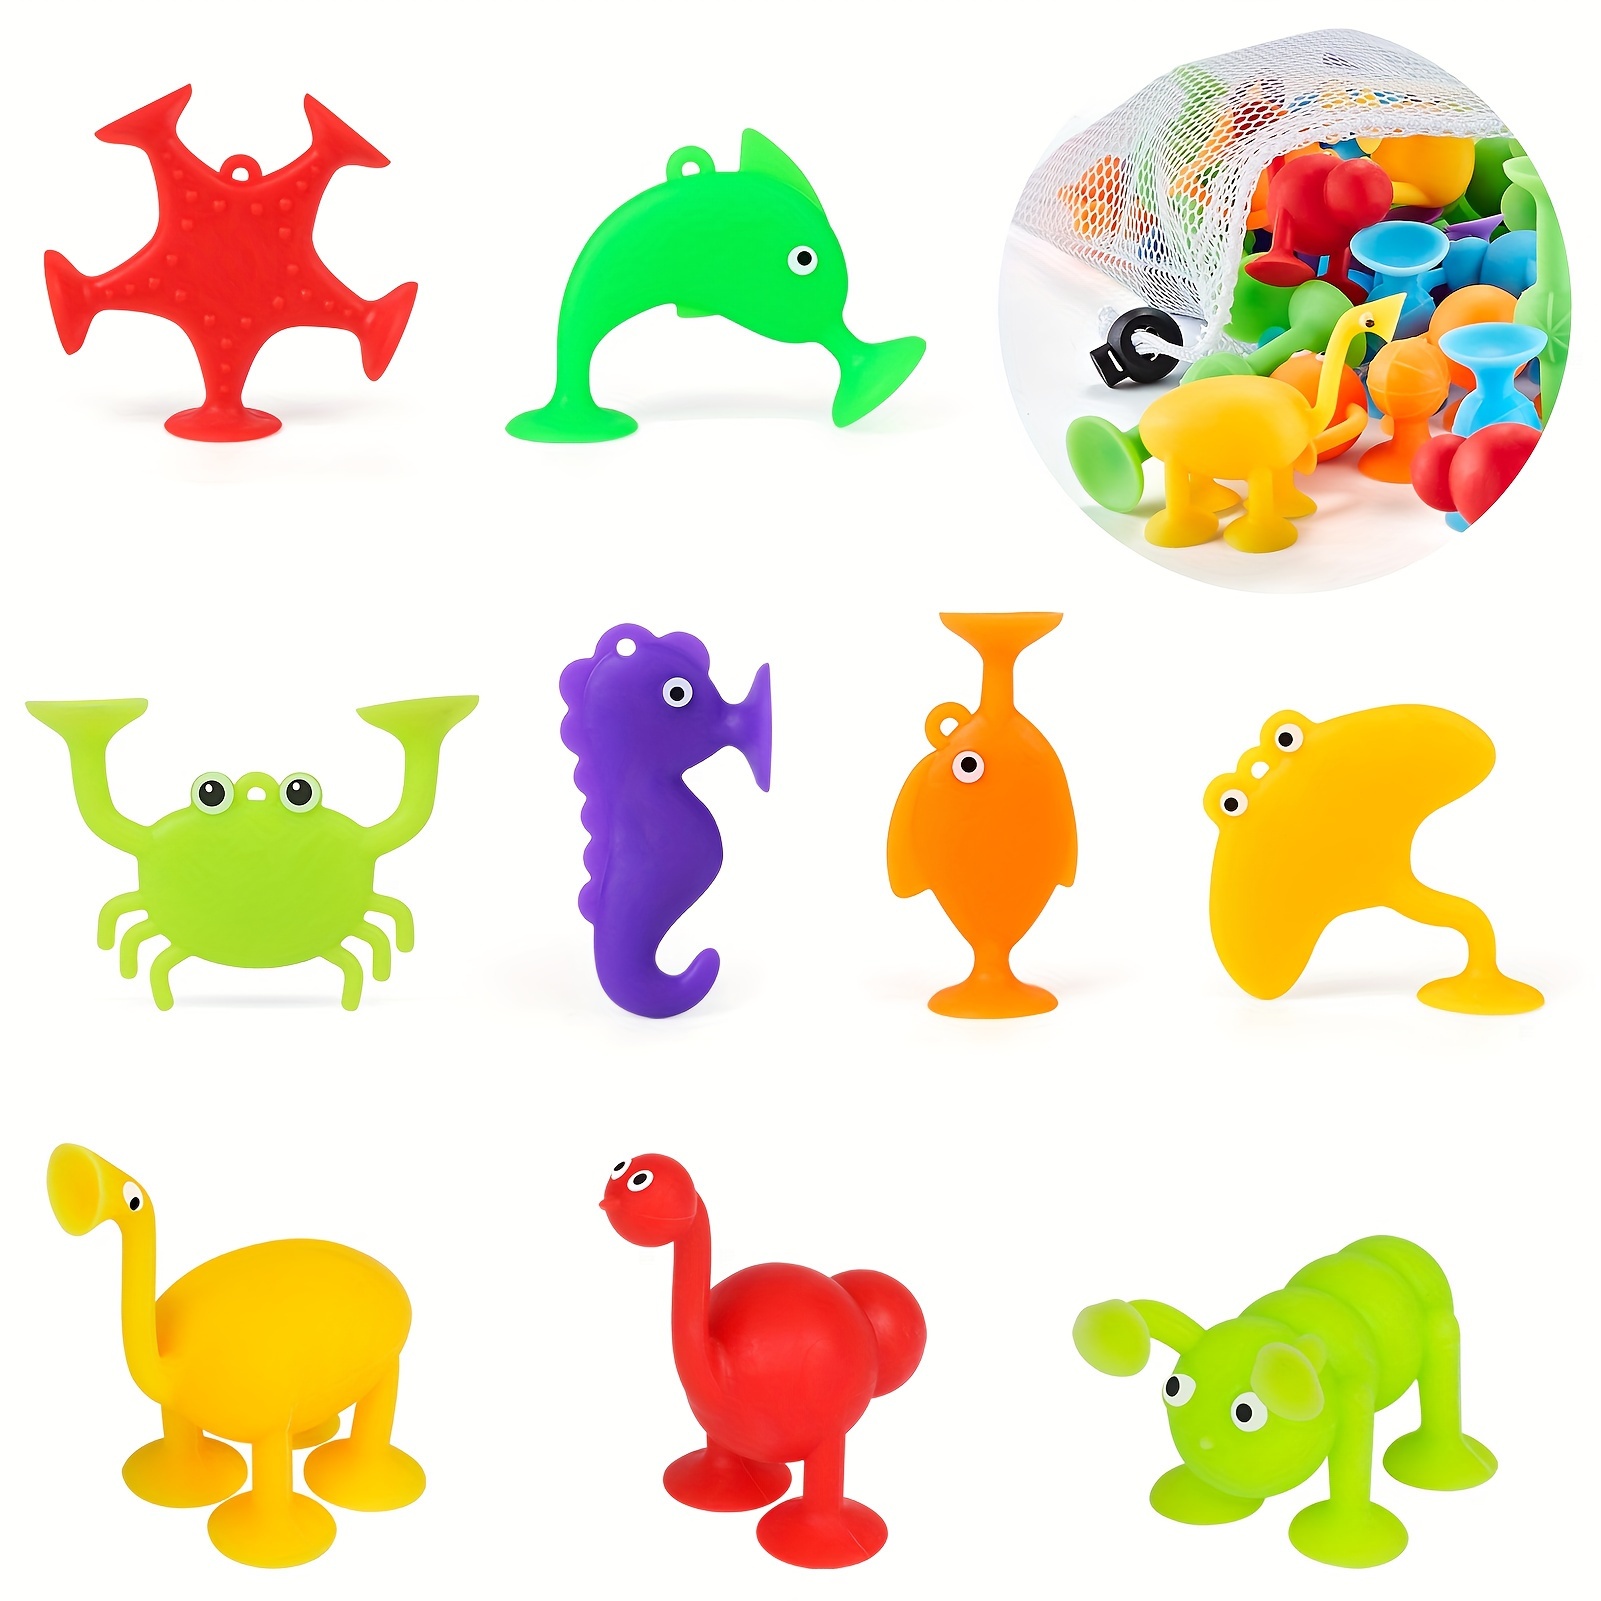  Baby Keys Montessori Juguetes para niños pequeños – Llaves de  juguete, juegos a juego para niños pequeños, juguetes de aprendizaje para  niños de 2 años – Llaves reales, juguetes de juego